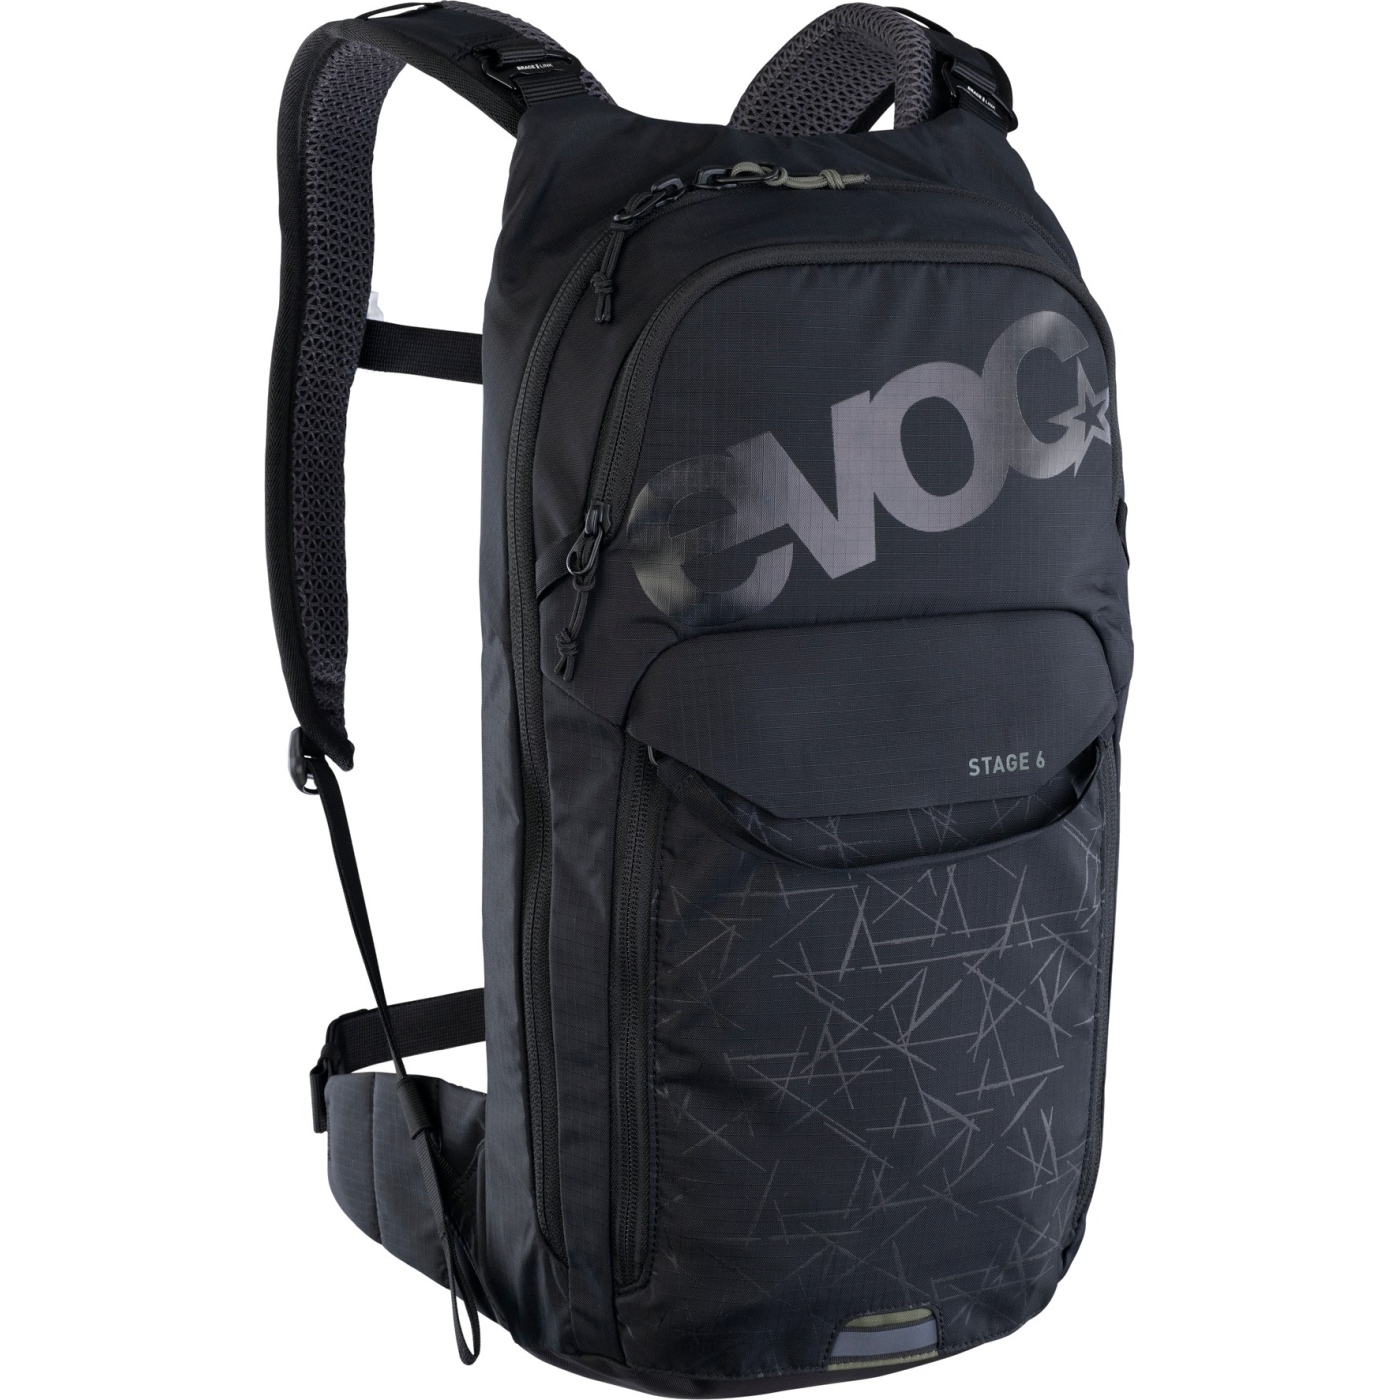 Picture of EVOC Stage Backpack - 6 L - Black